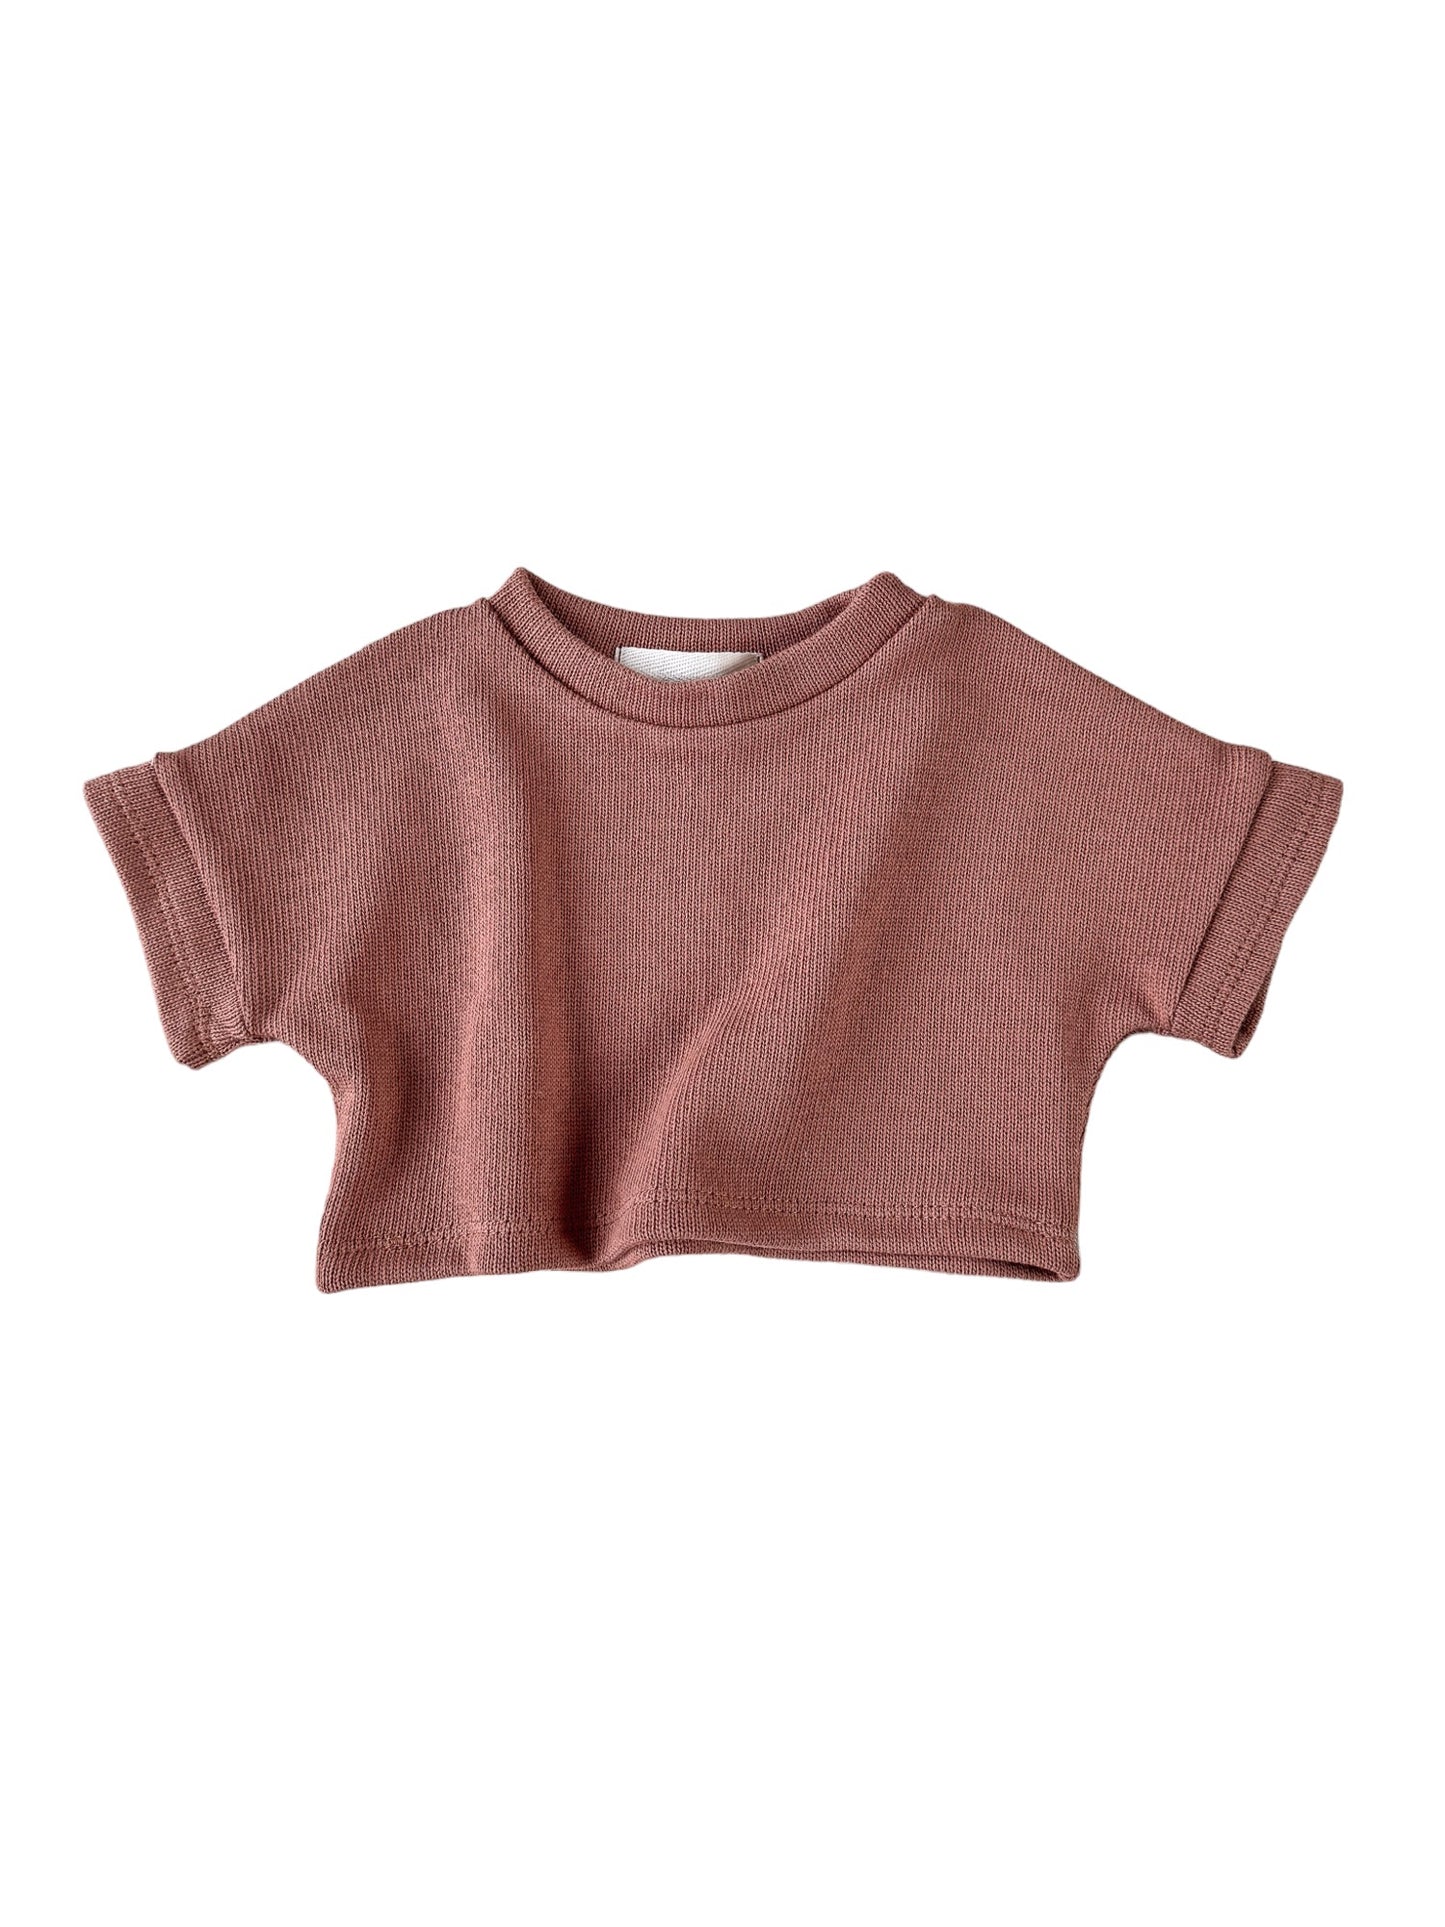 Knit t-shirt / clay